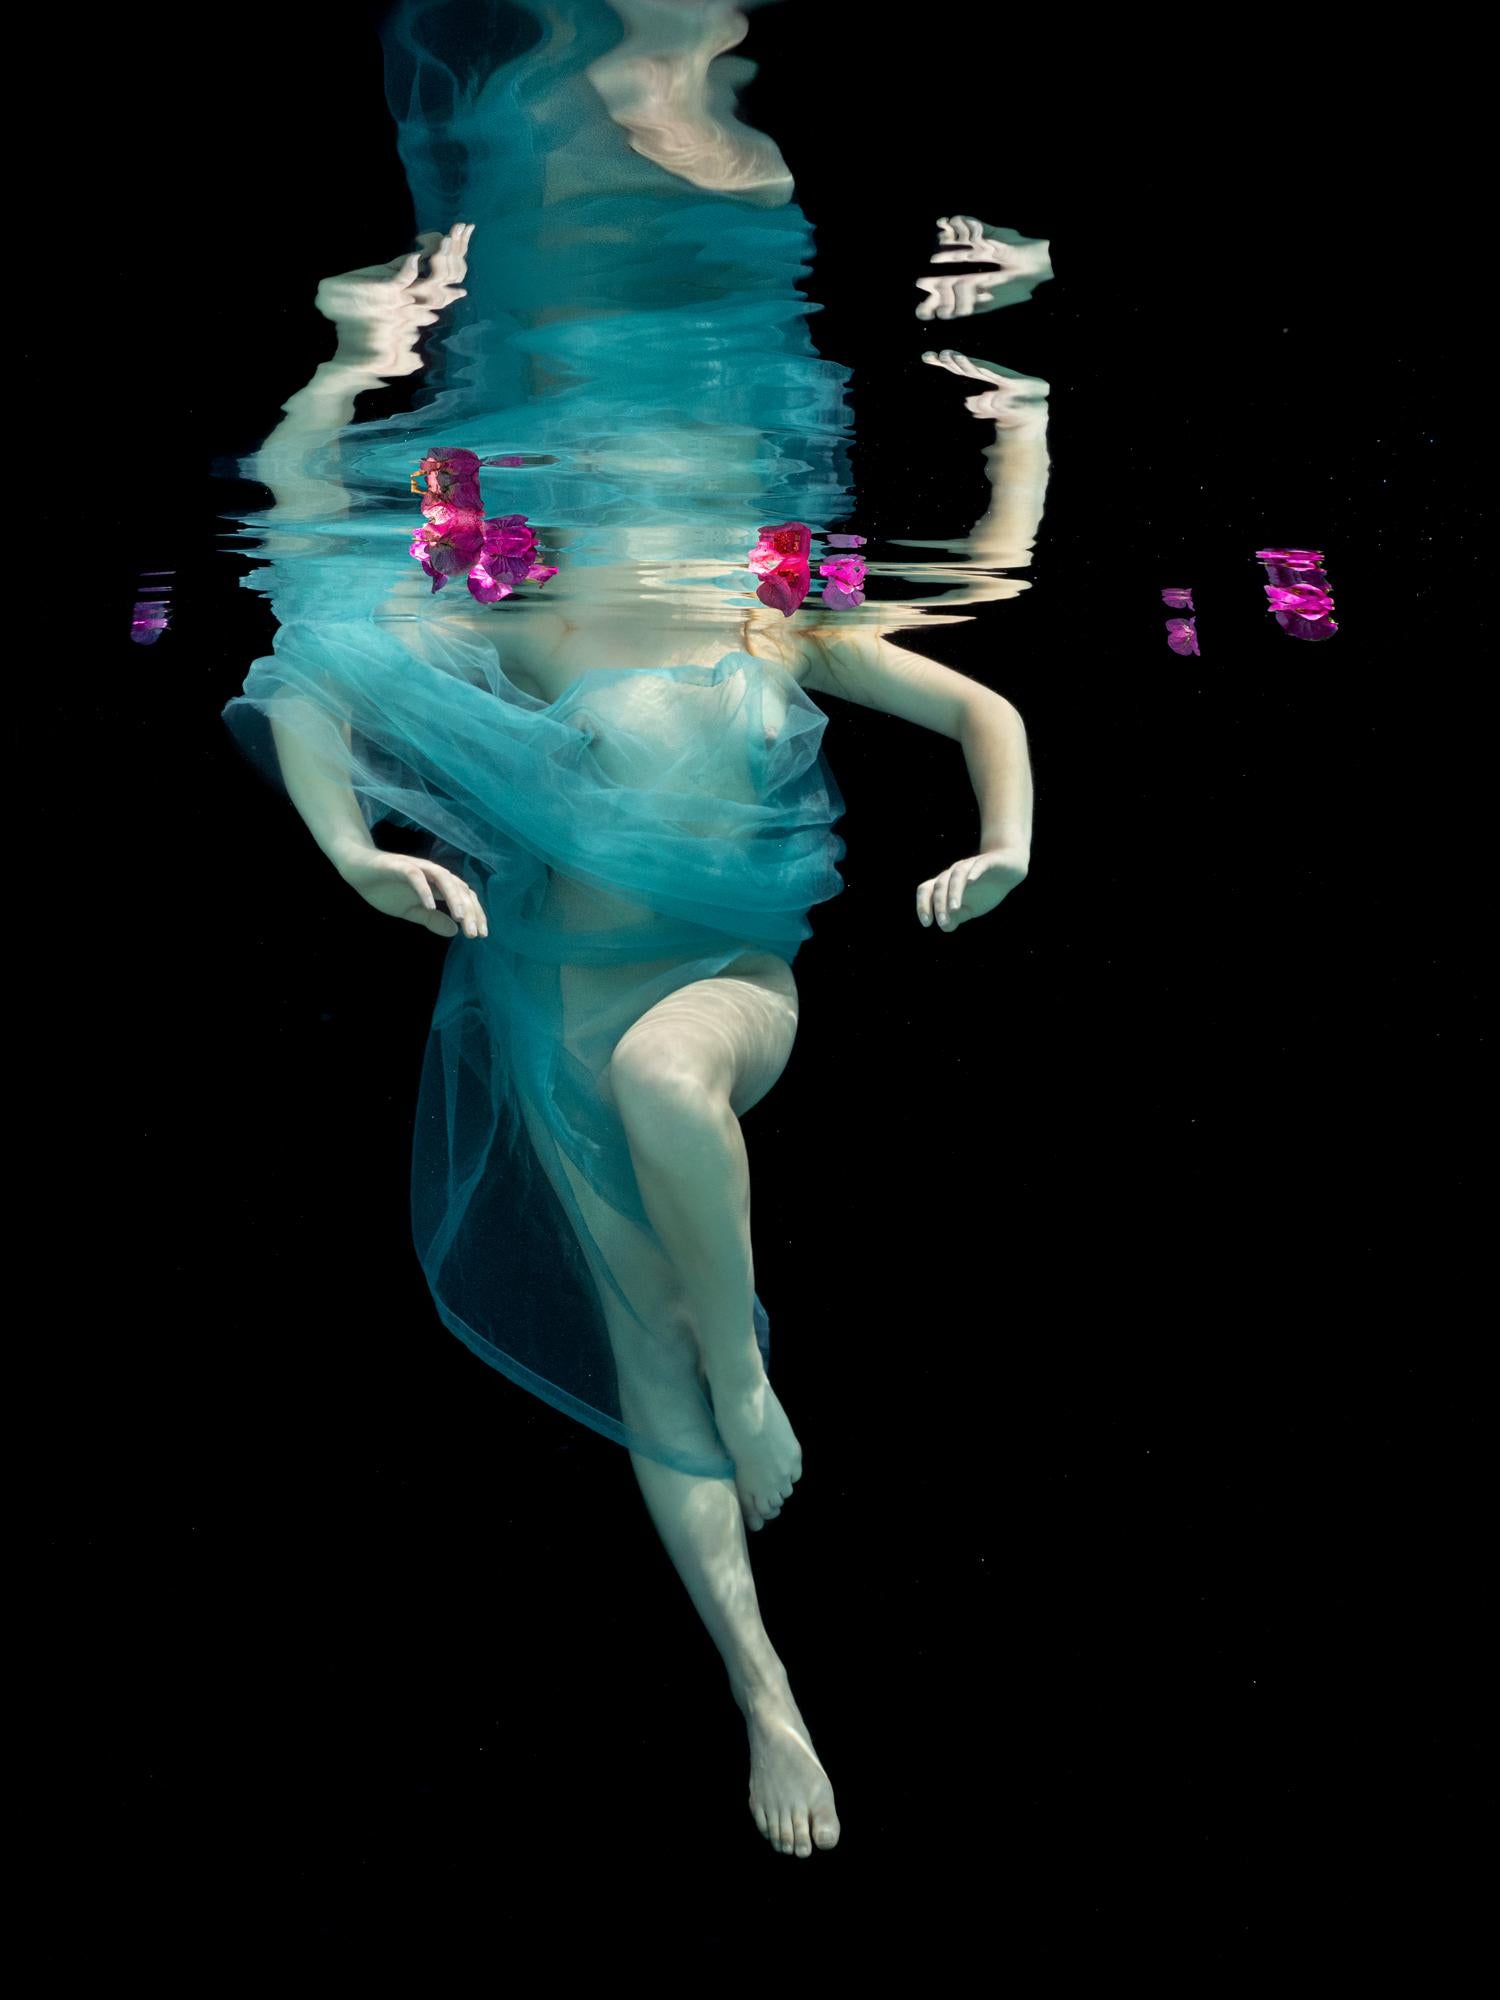 Alex Sher Figurative Photograph - Dancing Flowers - underwater nude photograph - archival pigment 24" x 18"